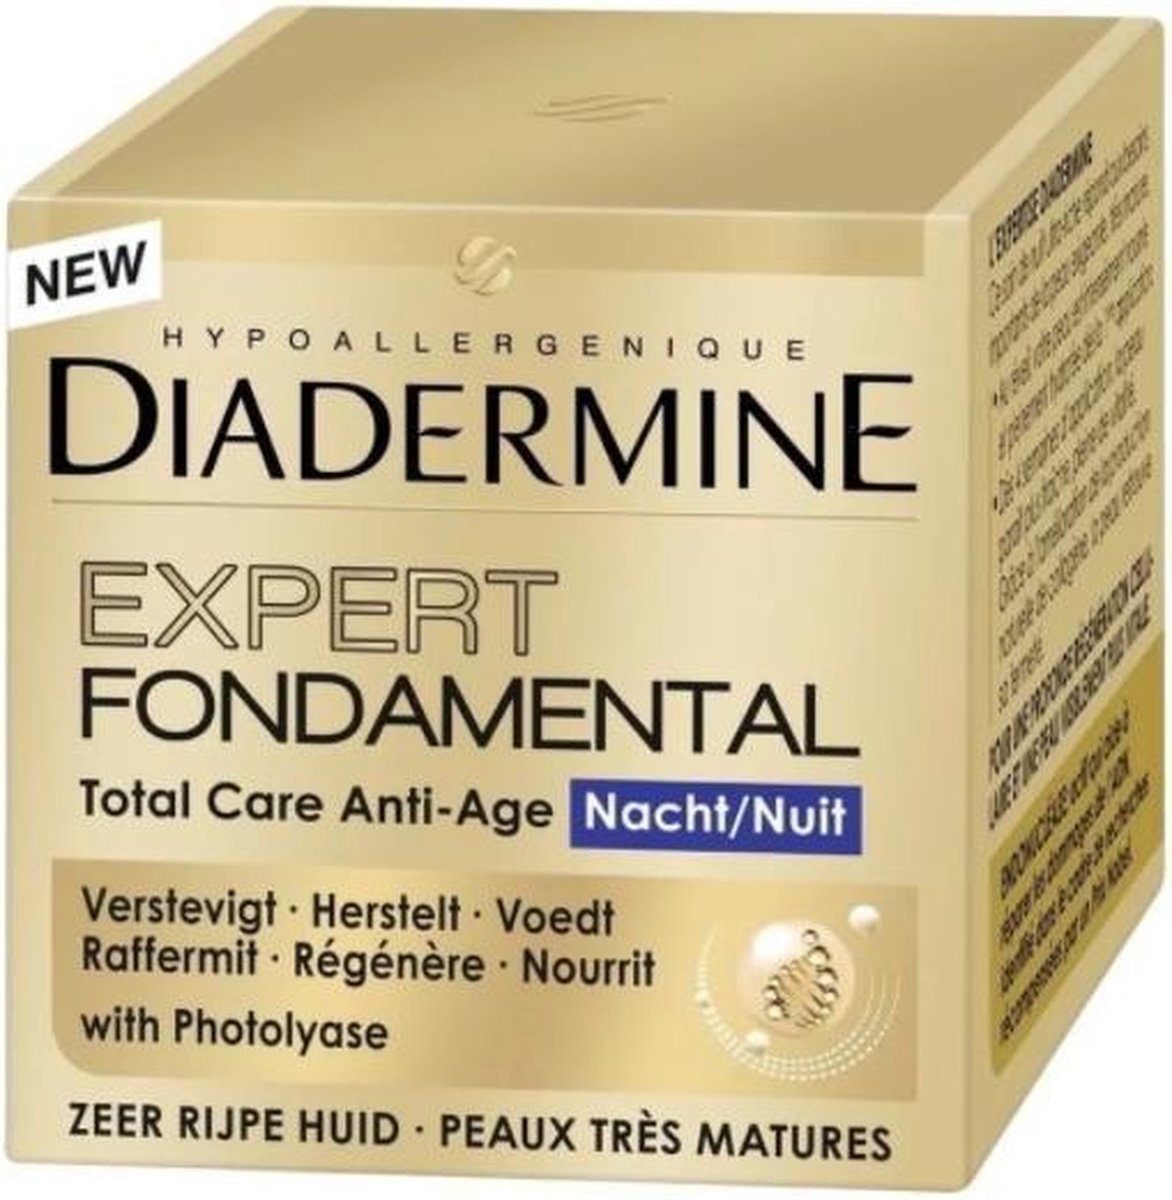 Diadermine Expert Crème de Nuit Fondamentale - 50ml